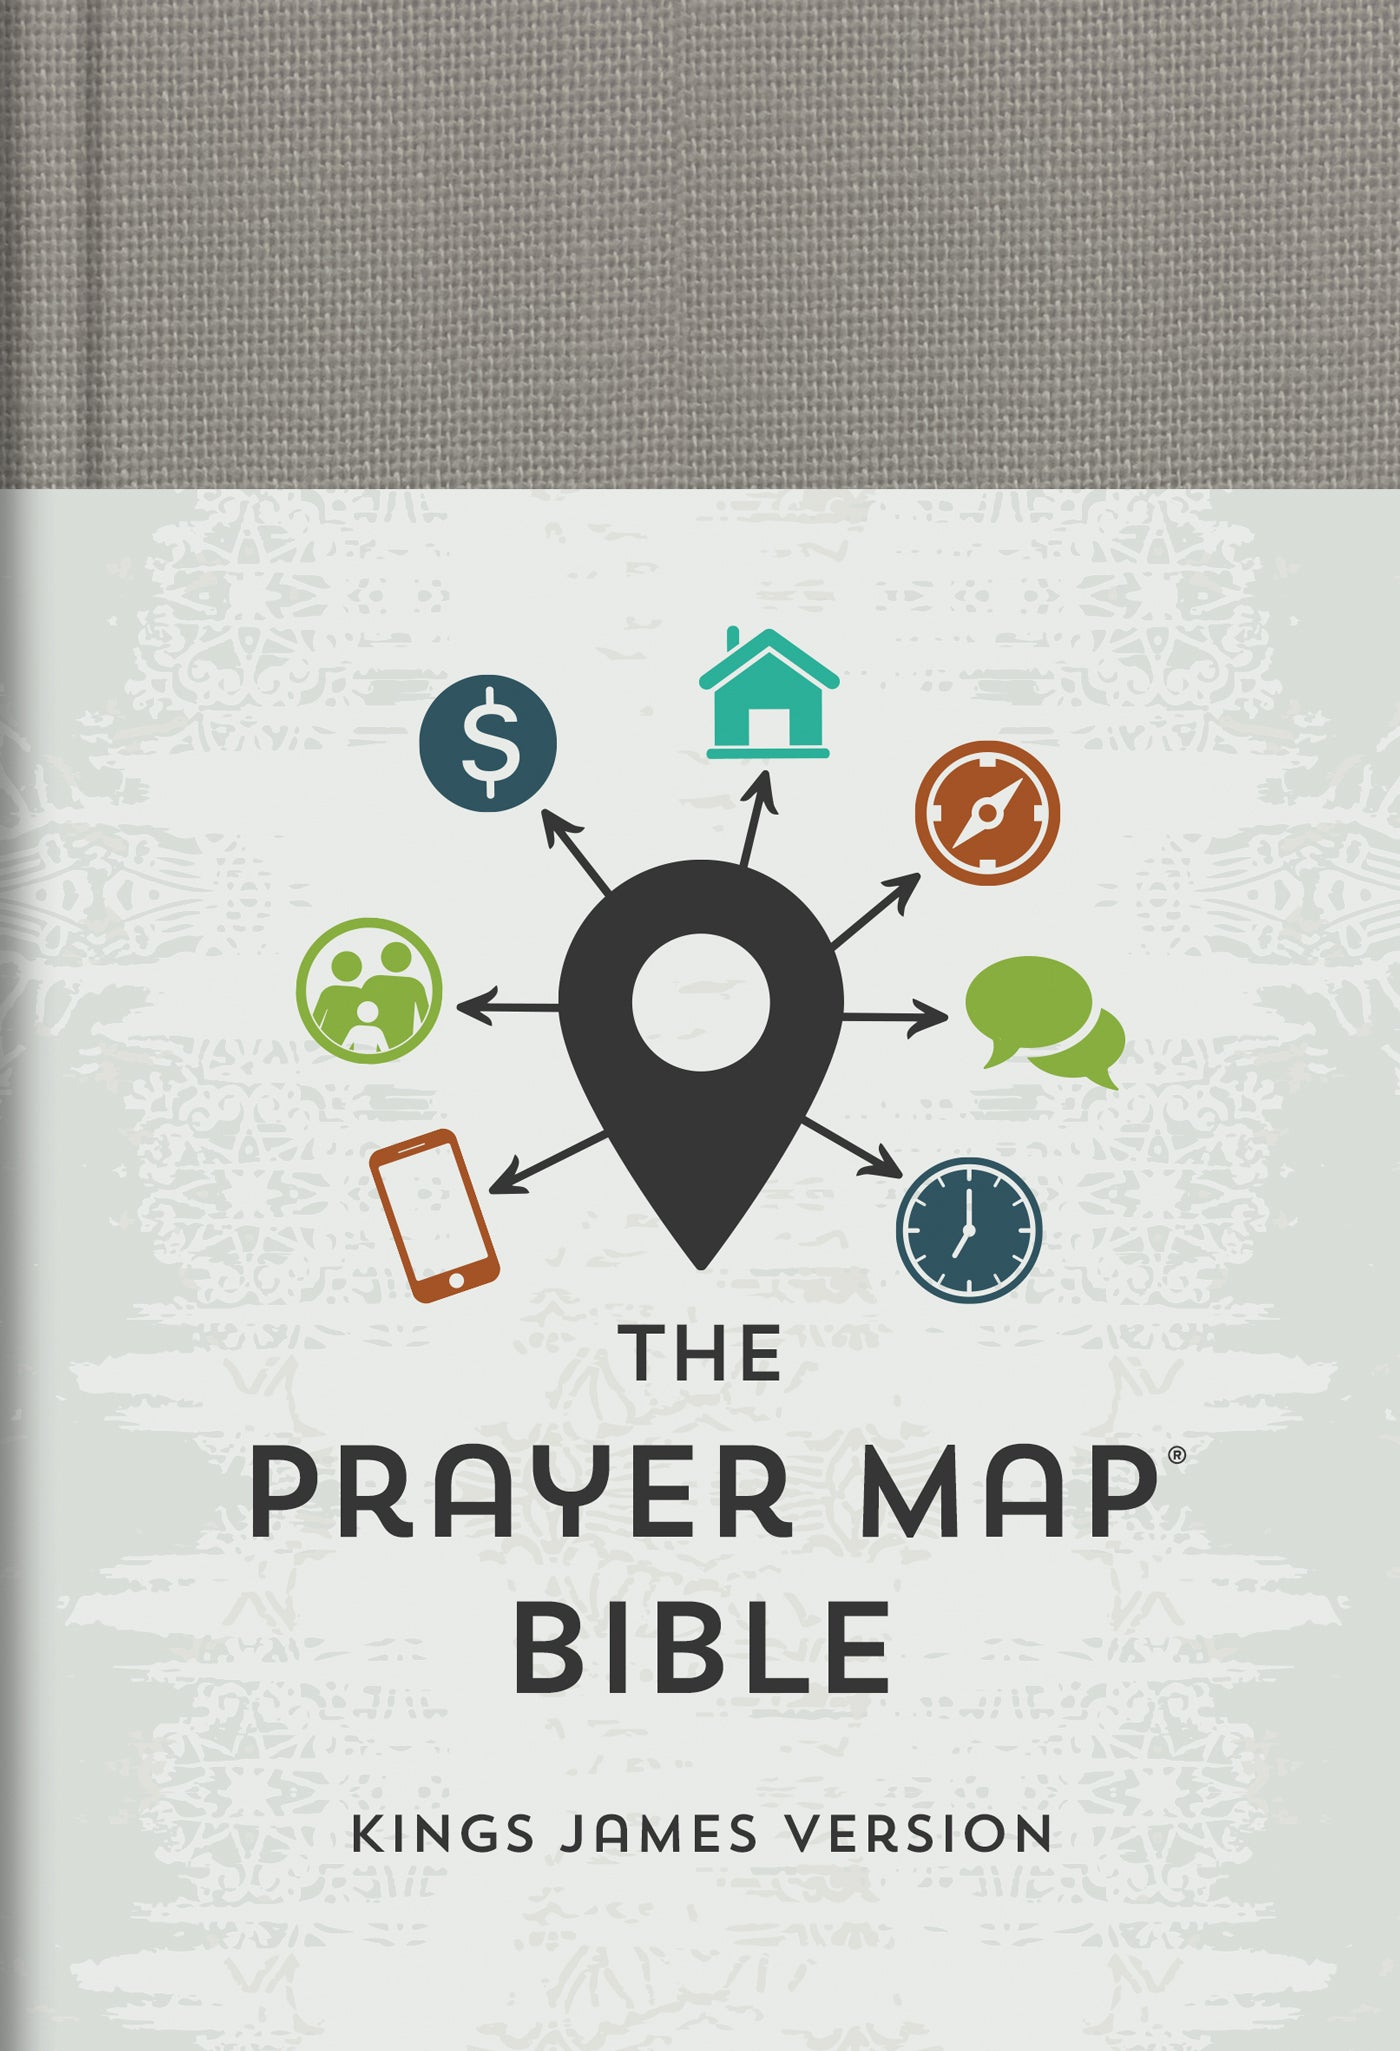 The KJV Prayer Map® Bible [Gray Weave] - The Christian Gift Company